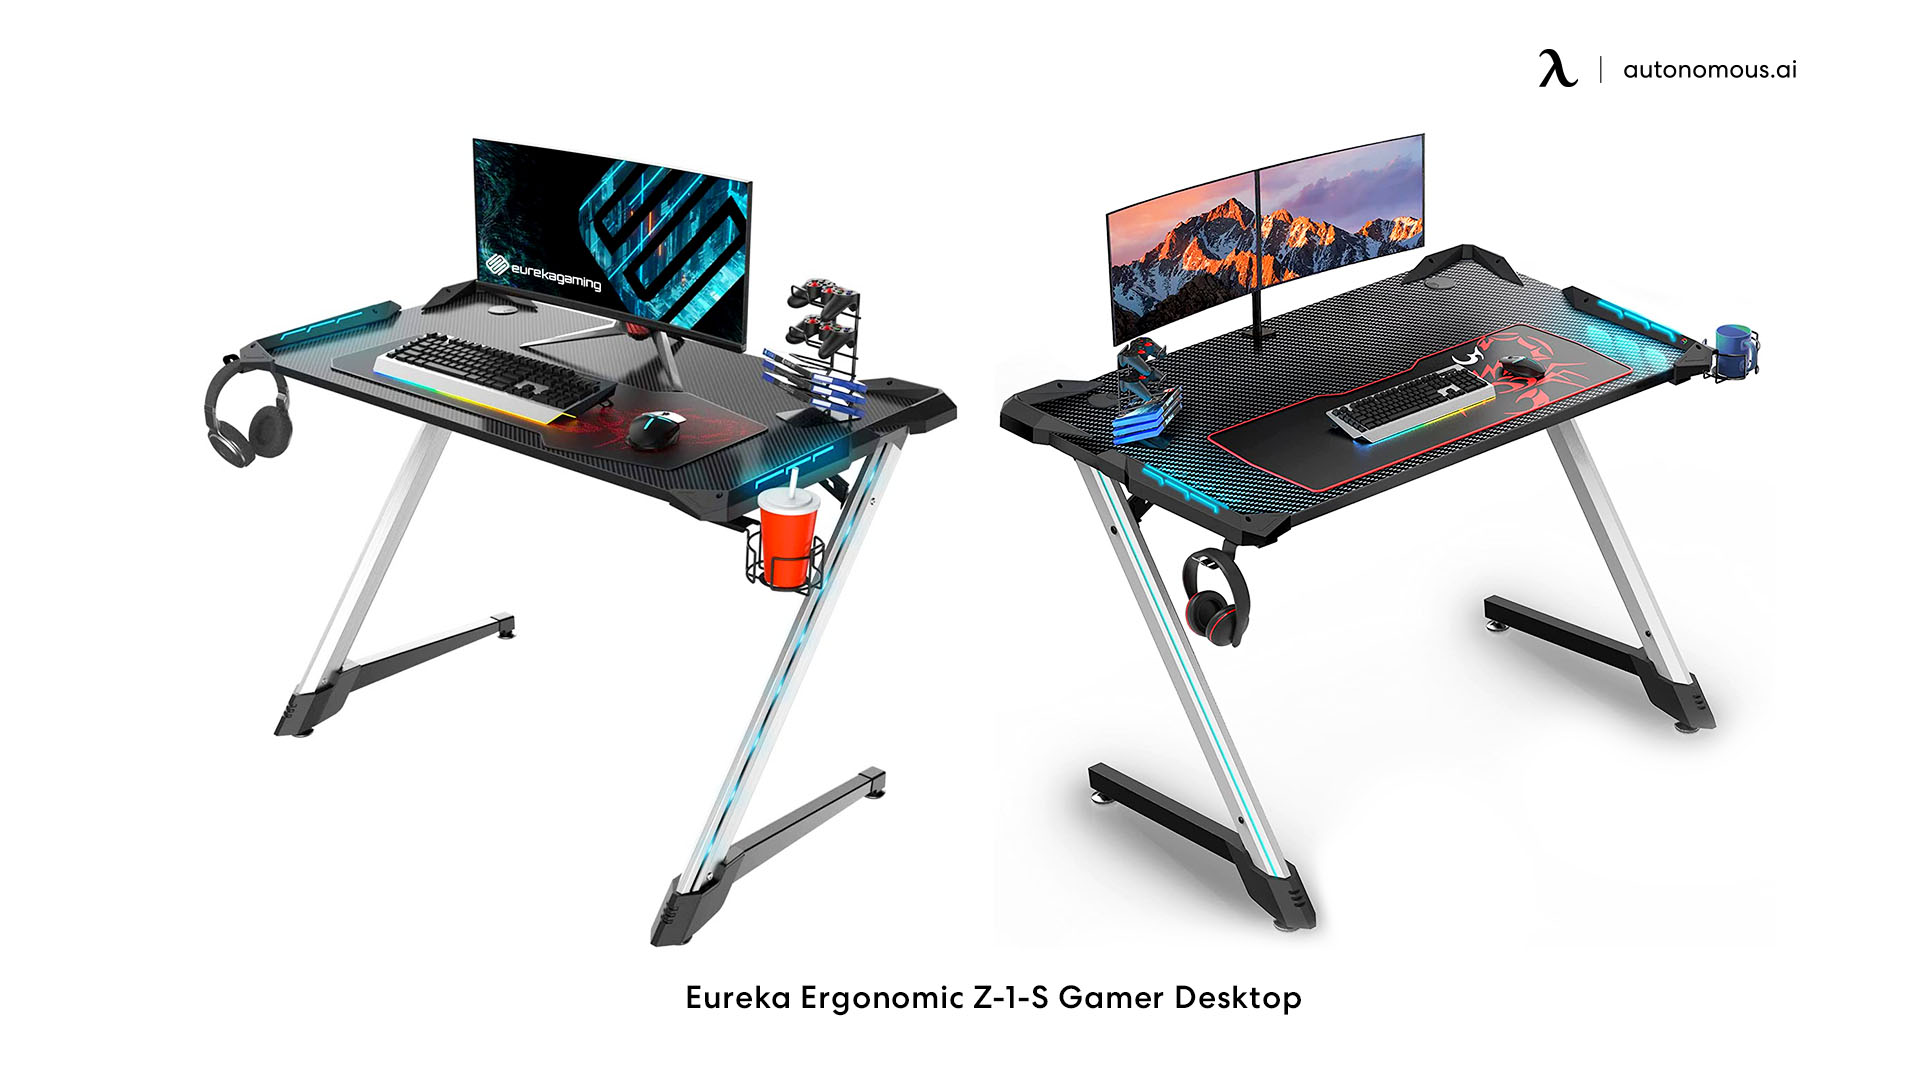 Eureka Ergonomic Z-1-S cheap gaming desk